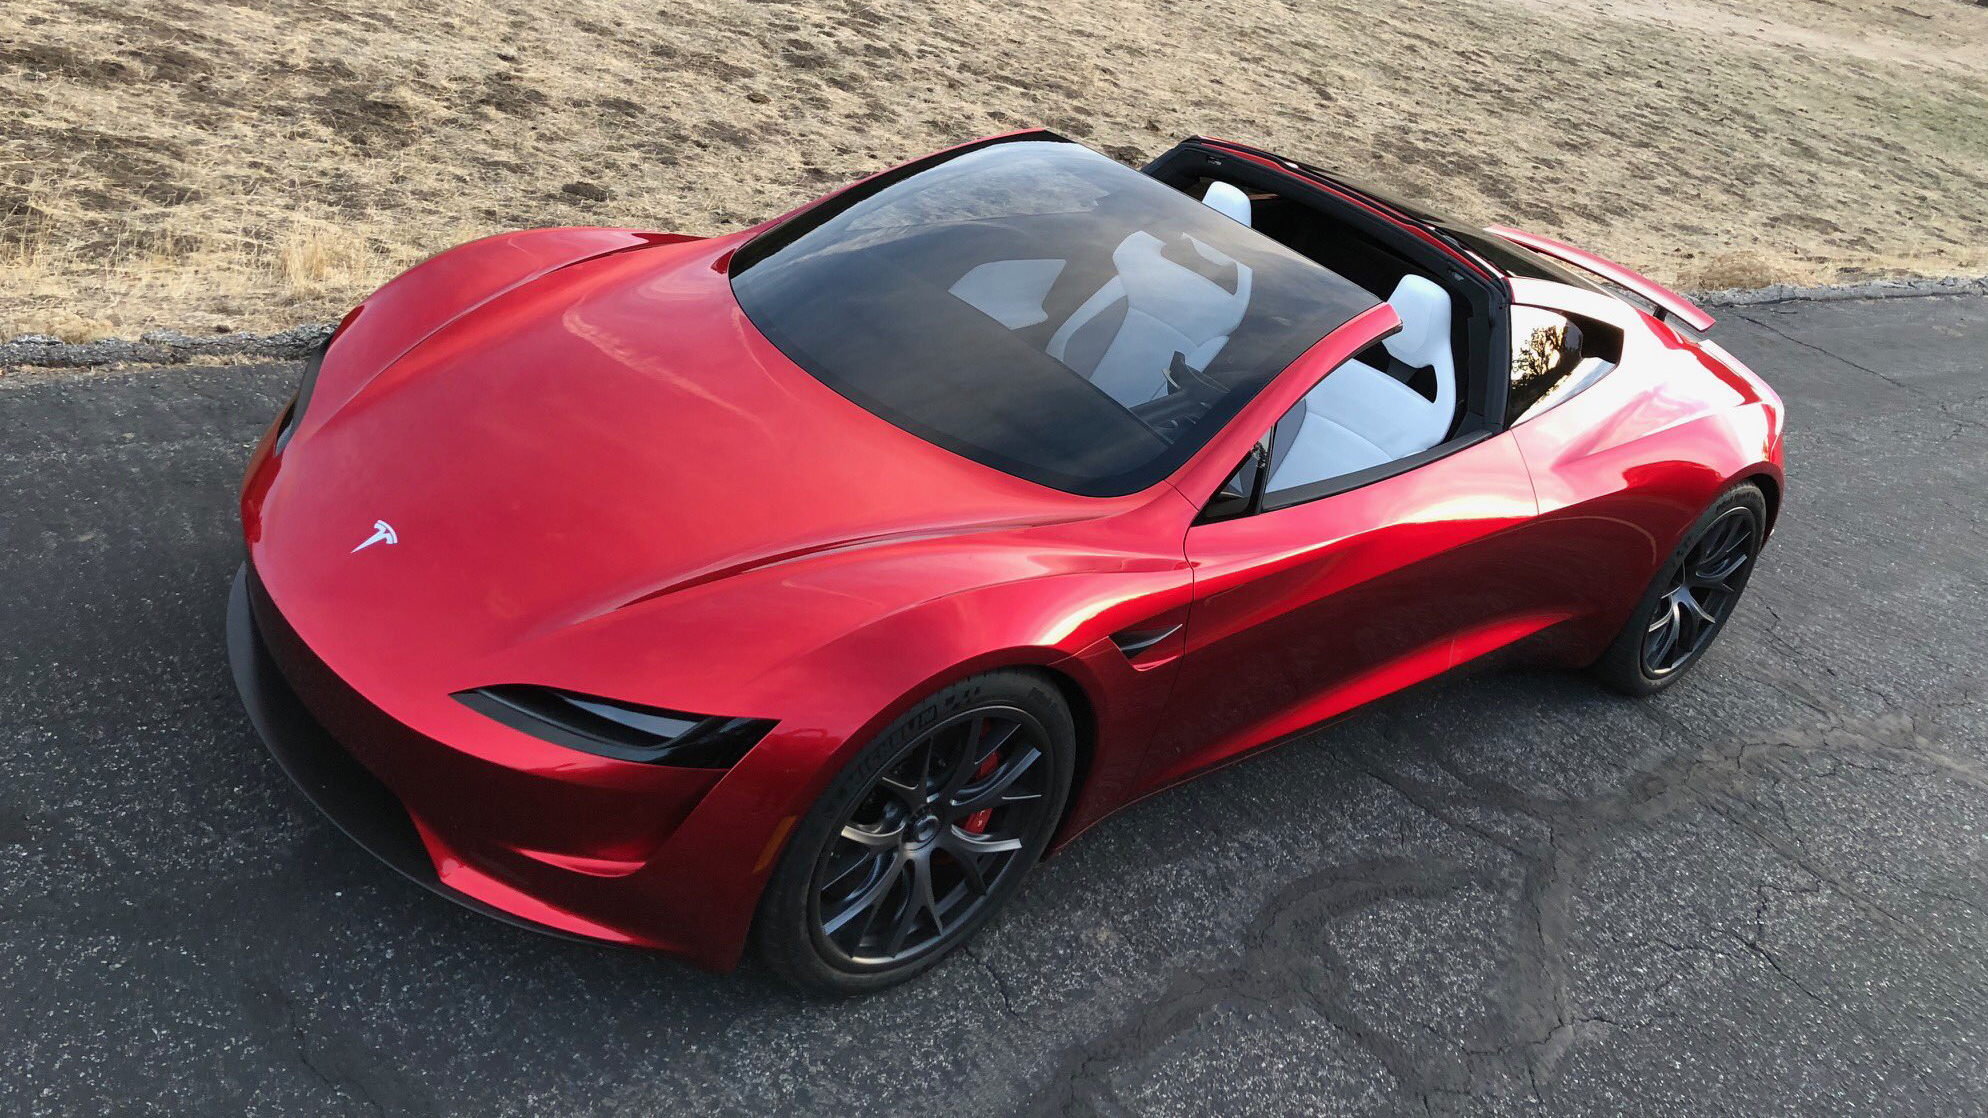 New Tesla Roadster will go from 0-60mph in 1.9secs | Top Gear